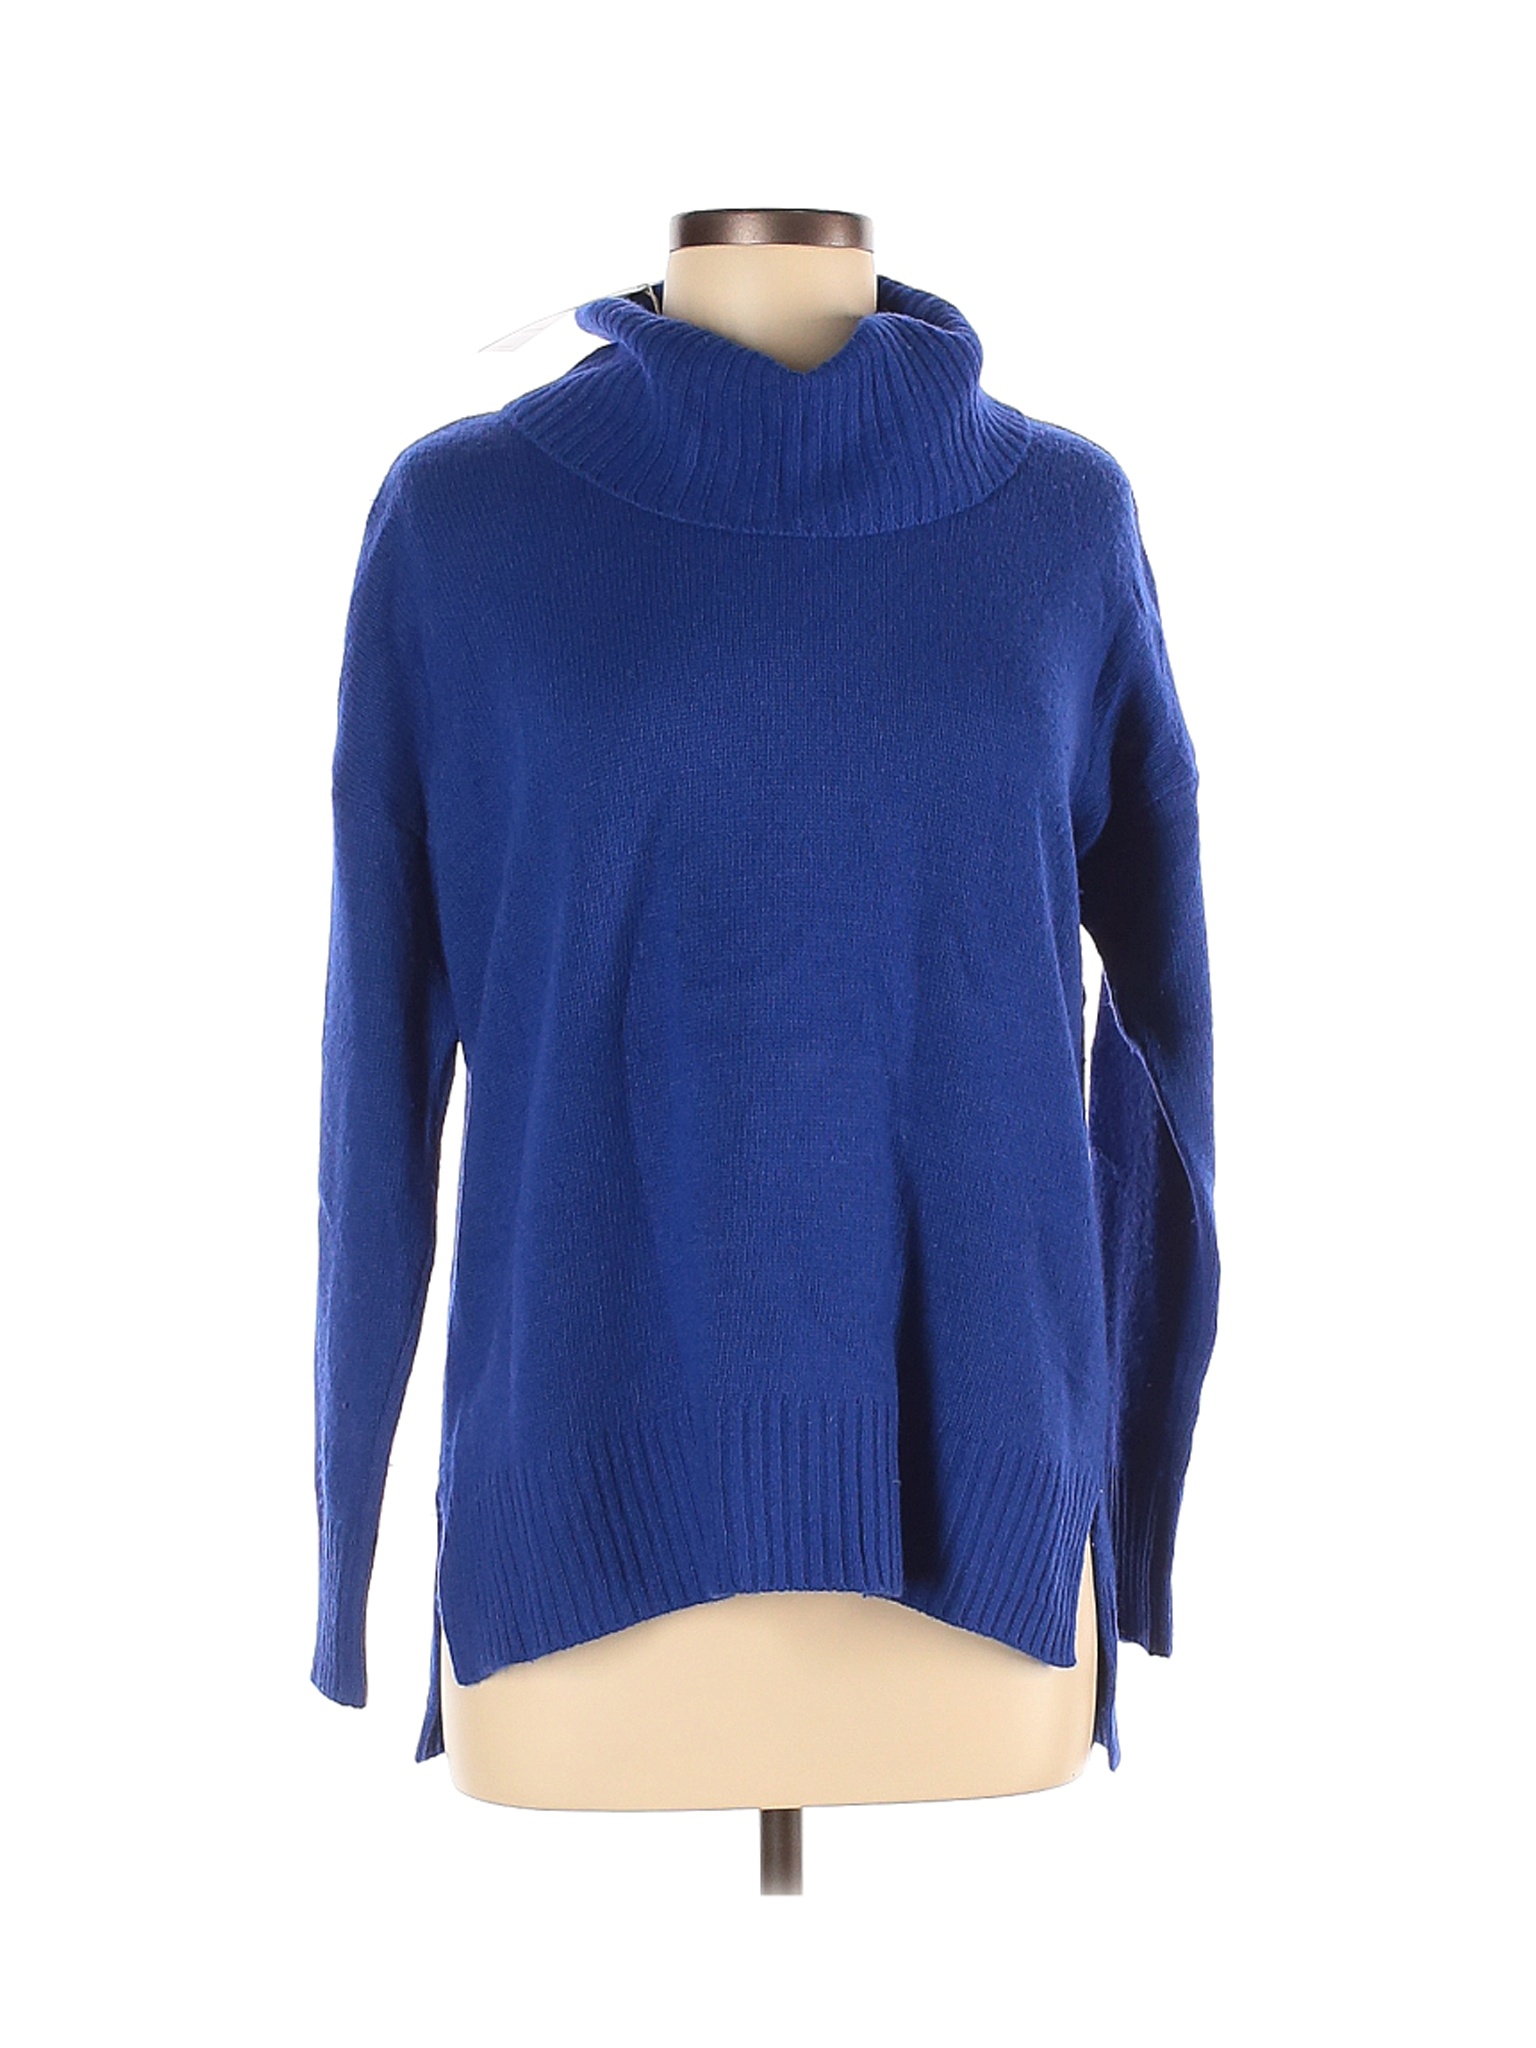 NWT Bartolini by benedetta Women Blue Pullover Sweater M | eBay